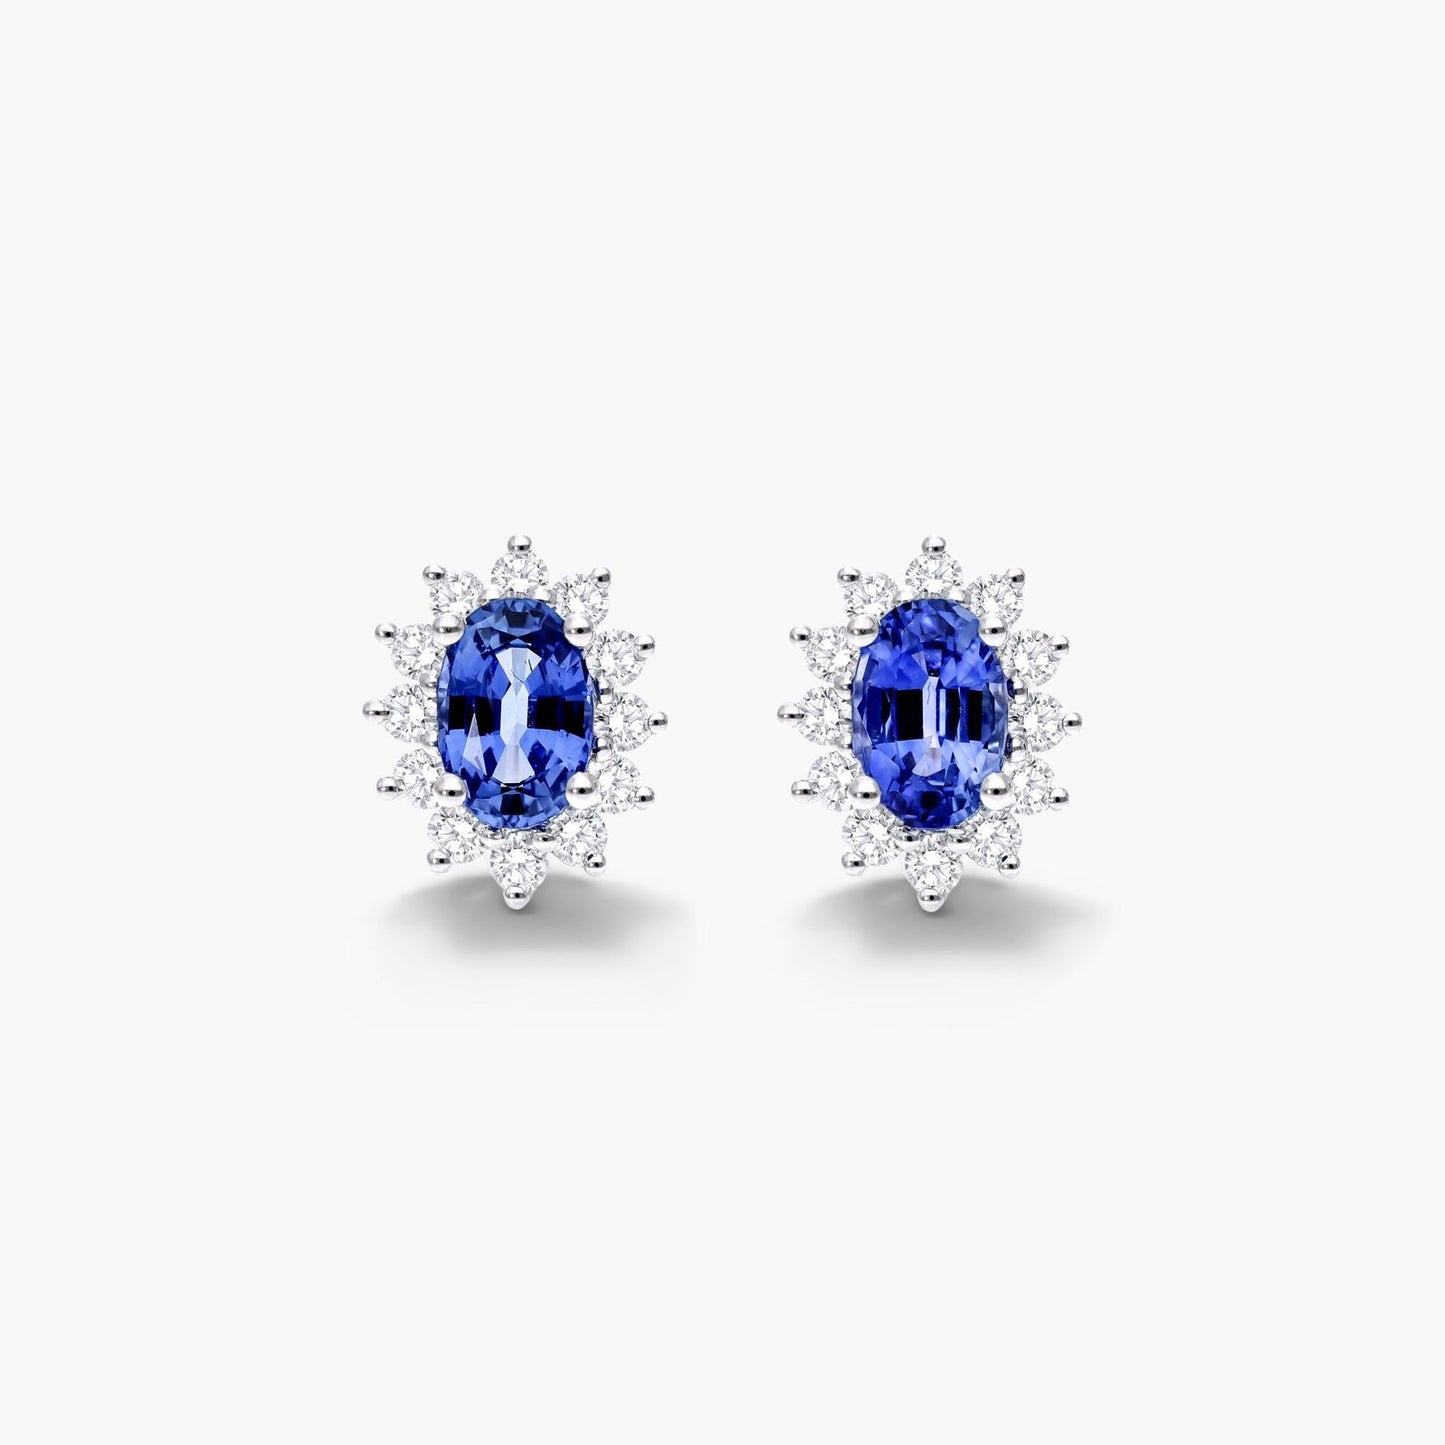 18K White Gold Oval Halo Gemstone Diamond Earrings